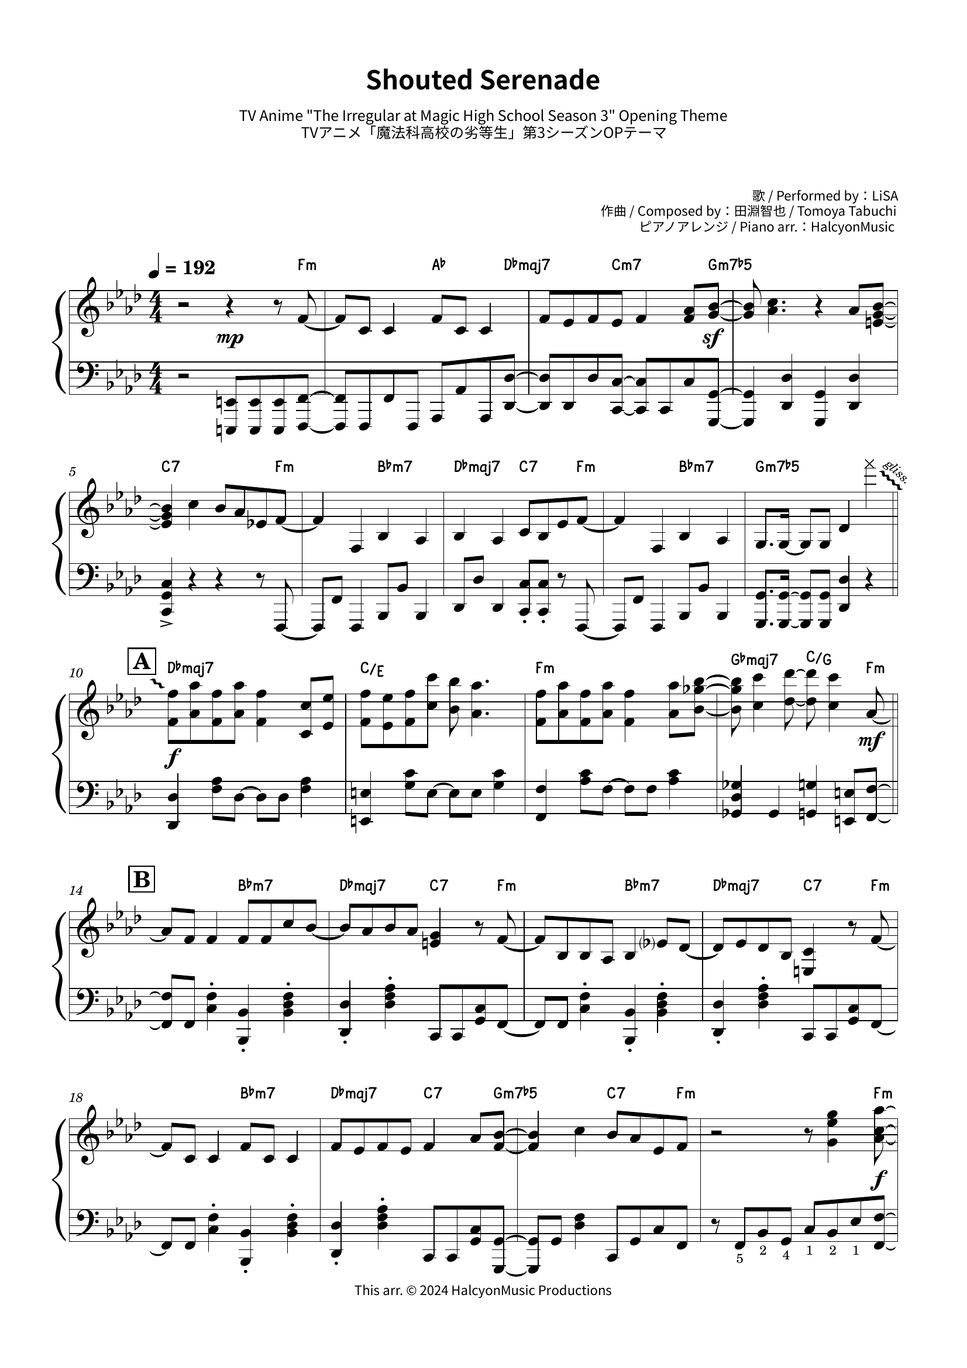 LiSA - Shouted Serenade (The Irregular at Magic High School Season 3 OP) by HalcyonMusic